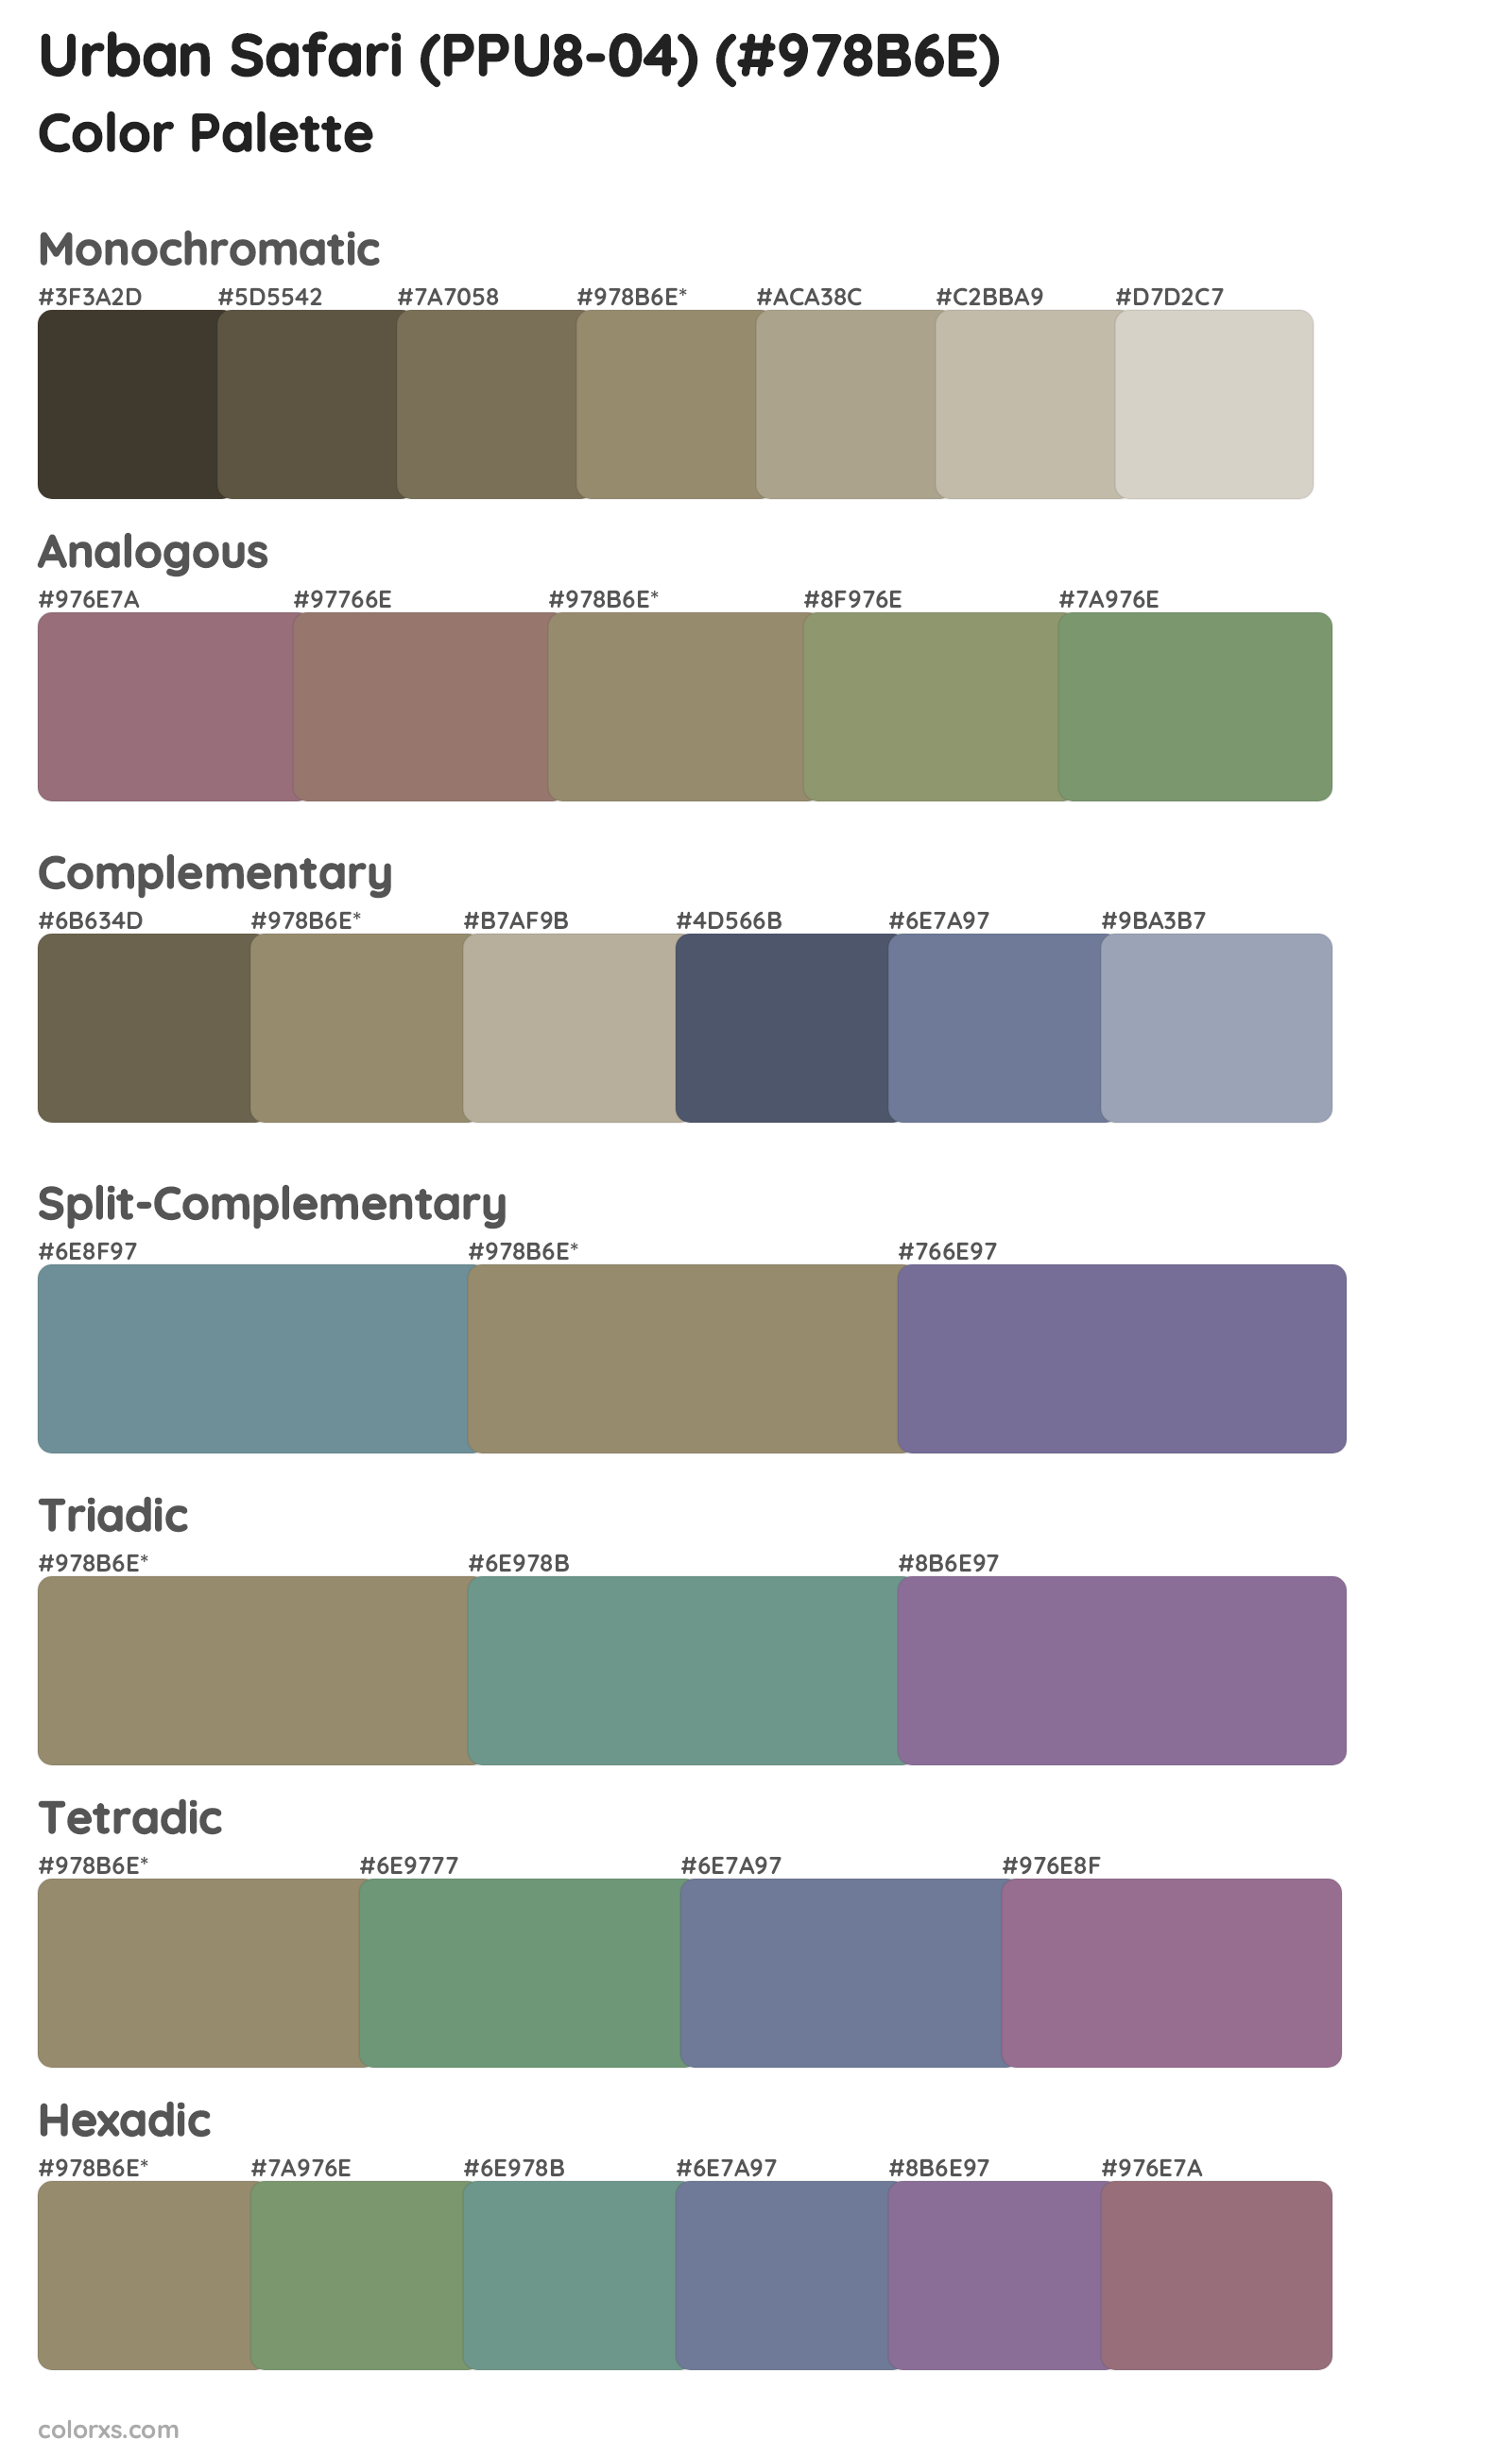 Urban Safari (PPU8-04) Color Scheme Palettes